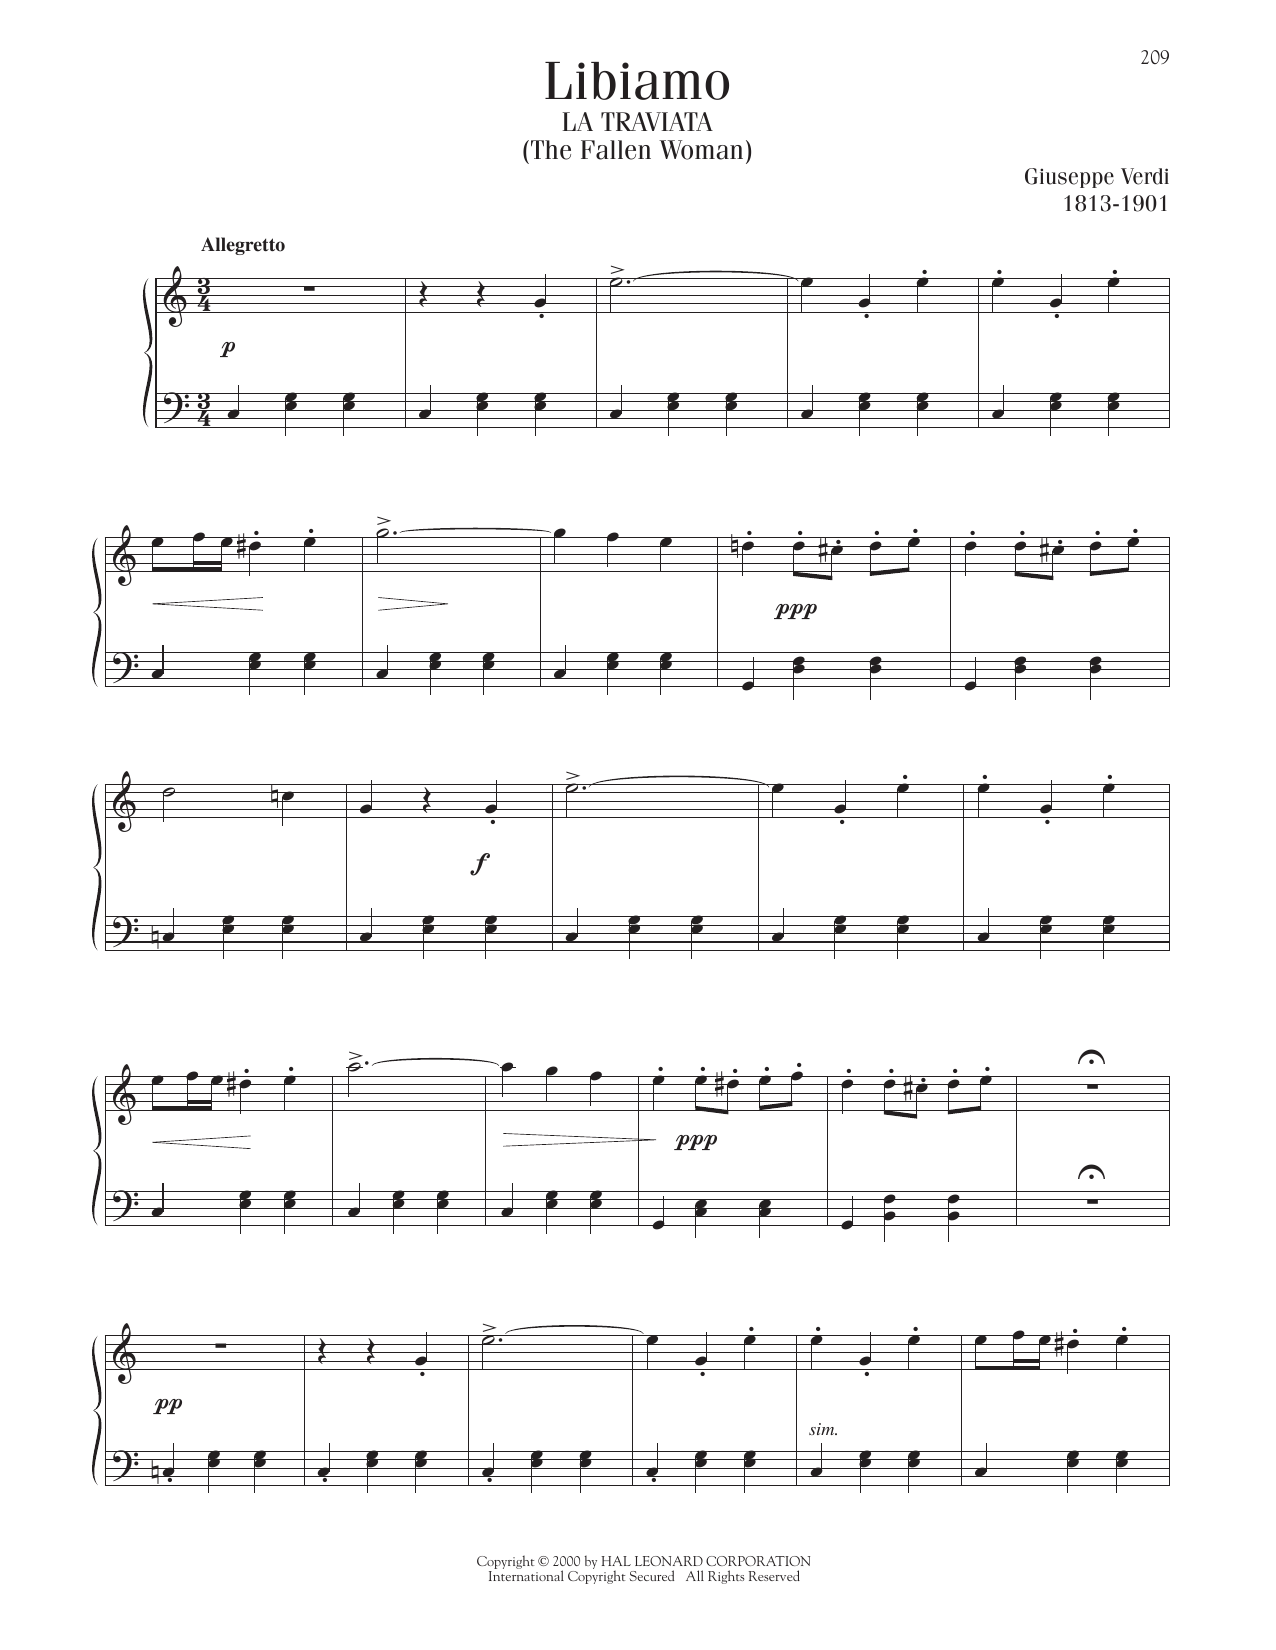 Giuseppe Verdi Libiamo (Brindisi) sheet music notes printable PDF score